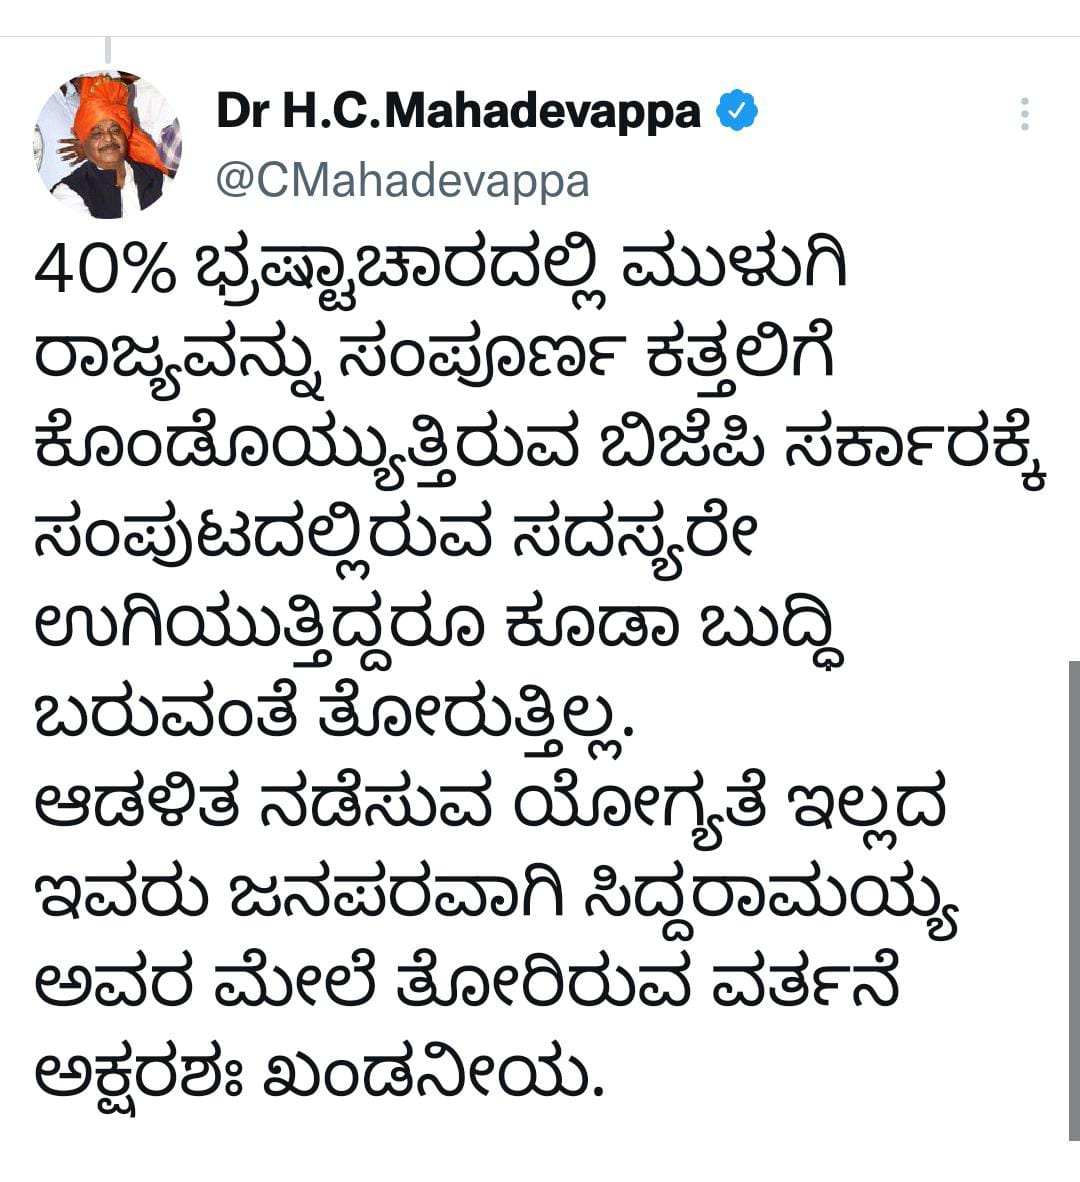 HC Mahadevappa tweet